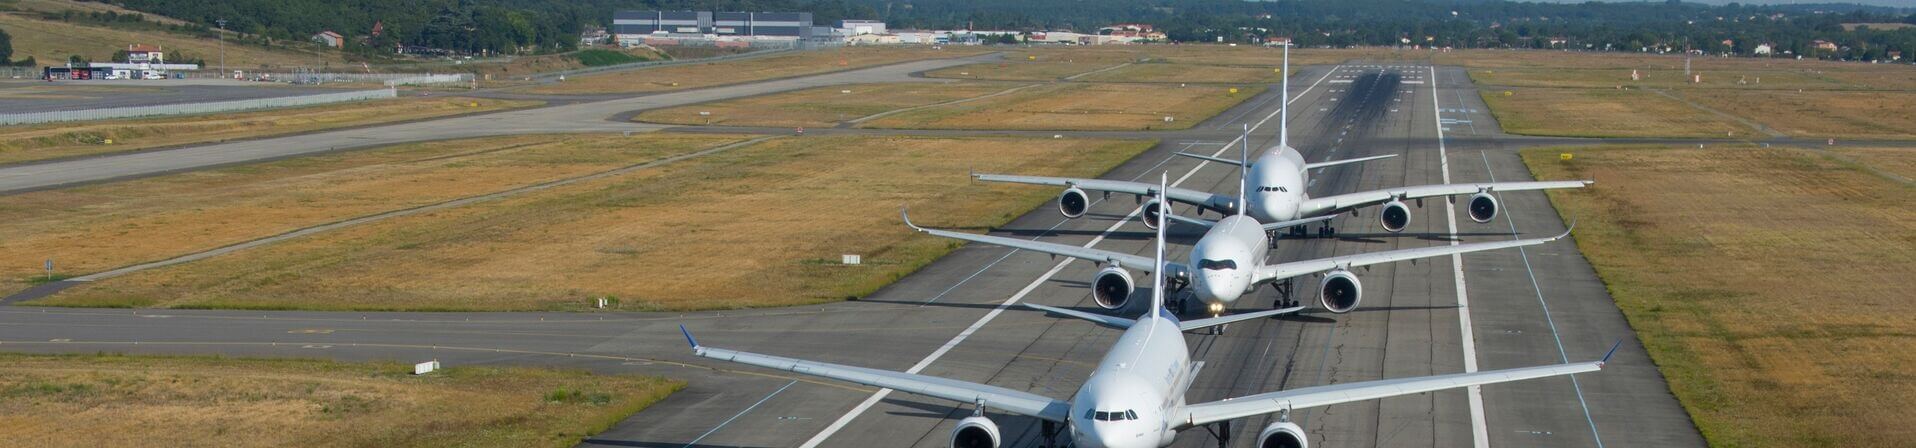 Avianca to get Airbus fleet support from Lufthansa Technik